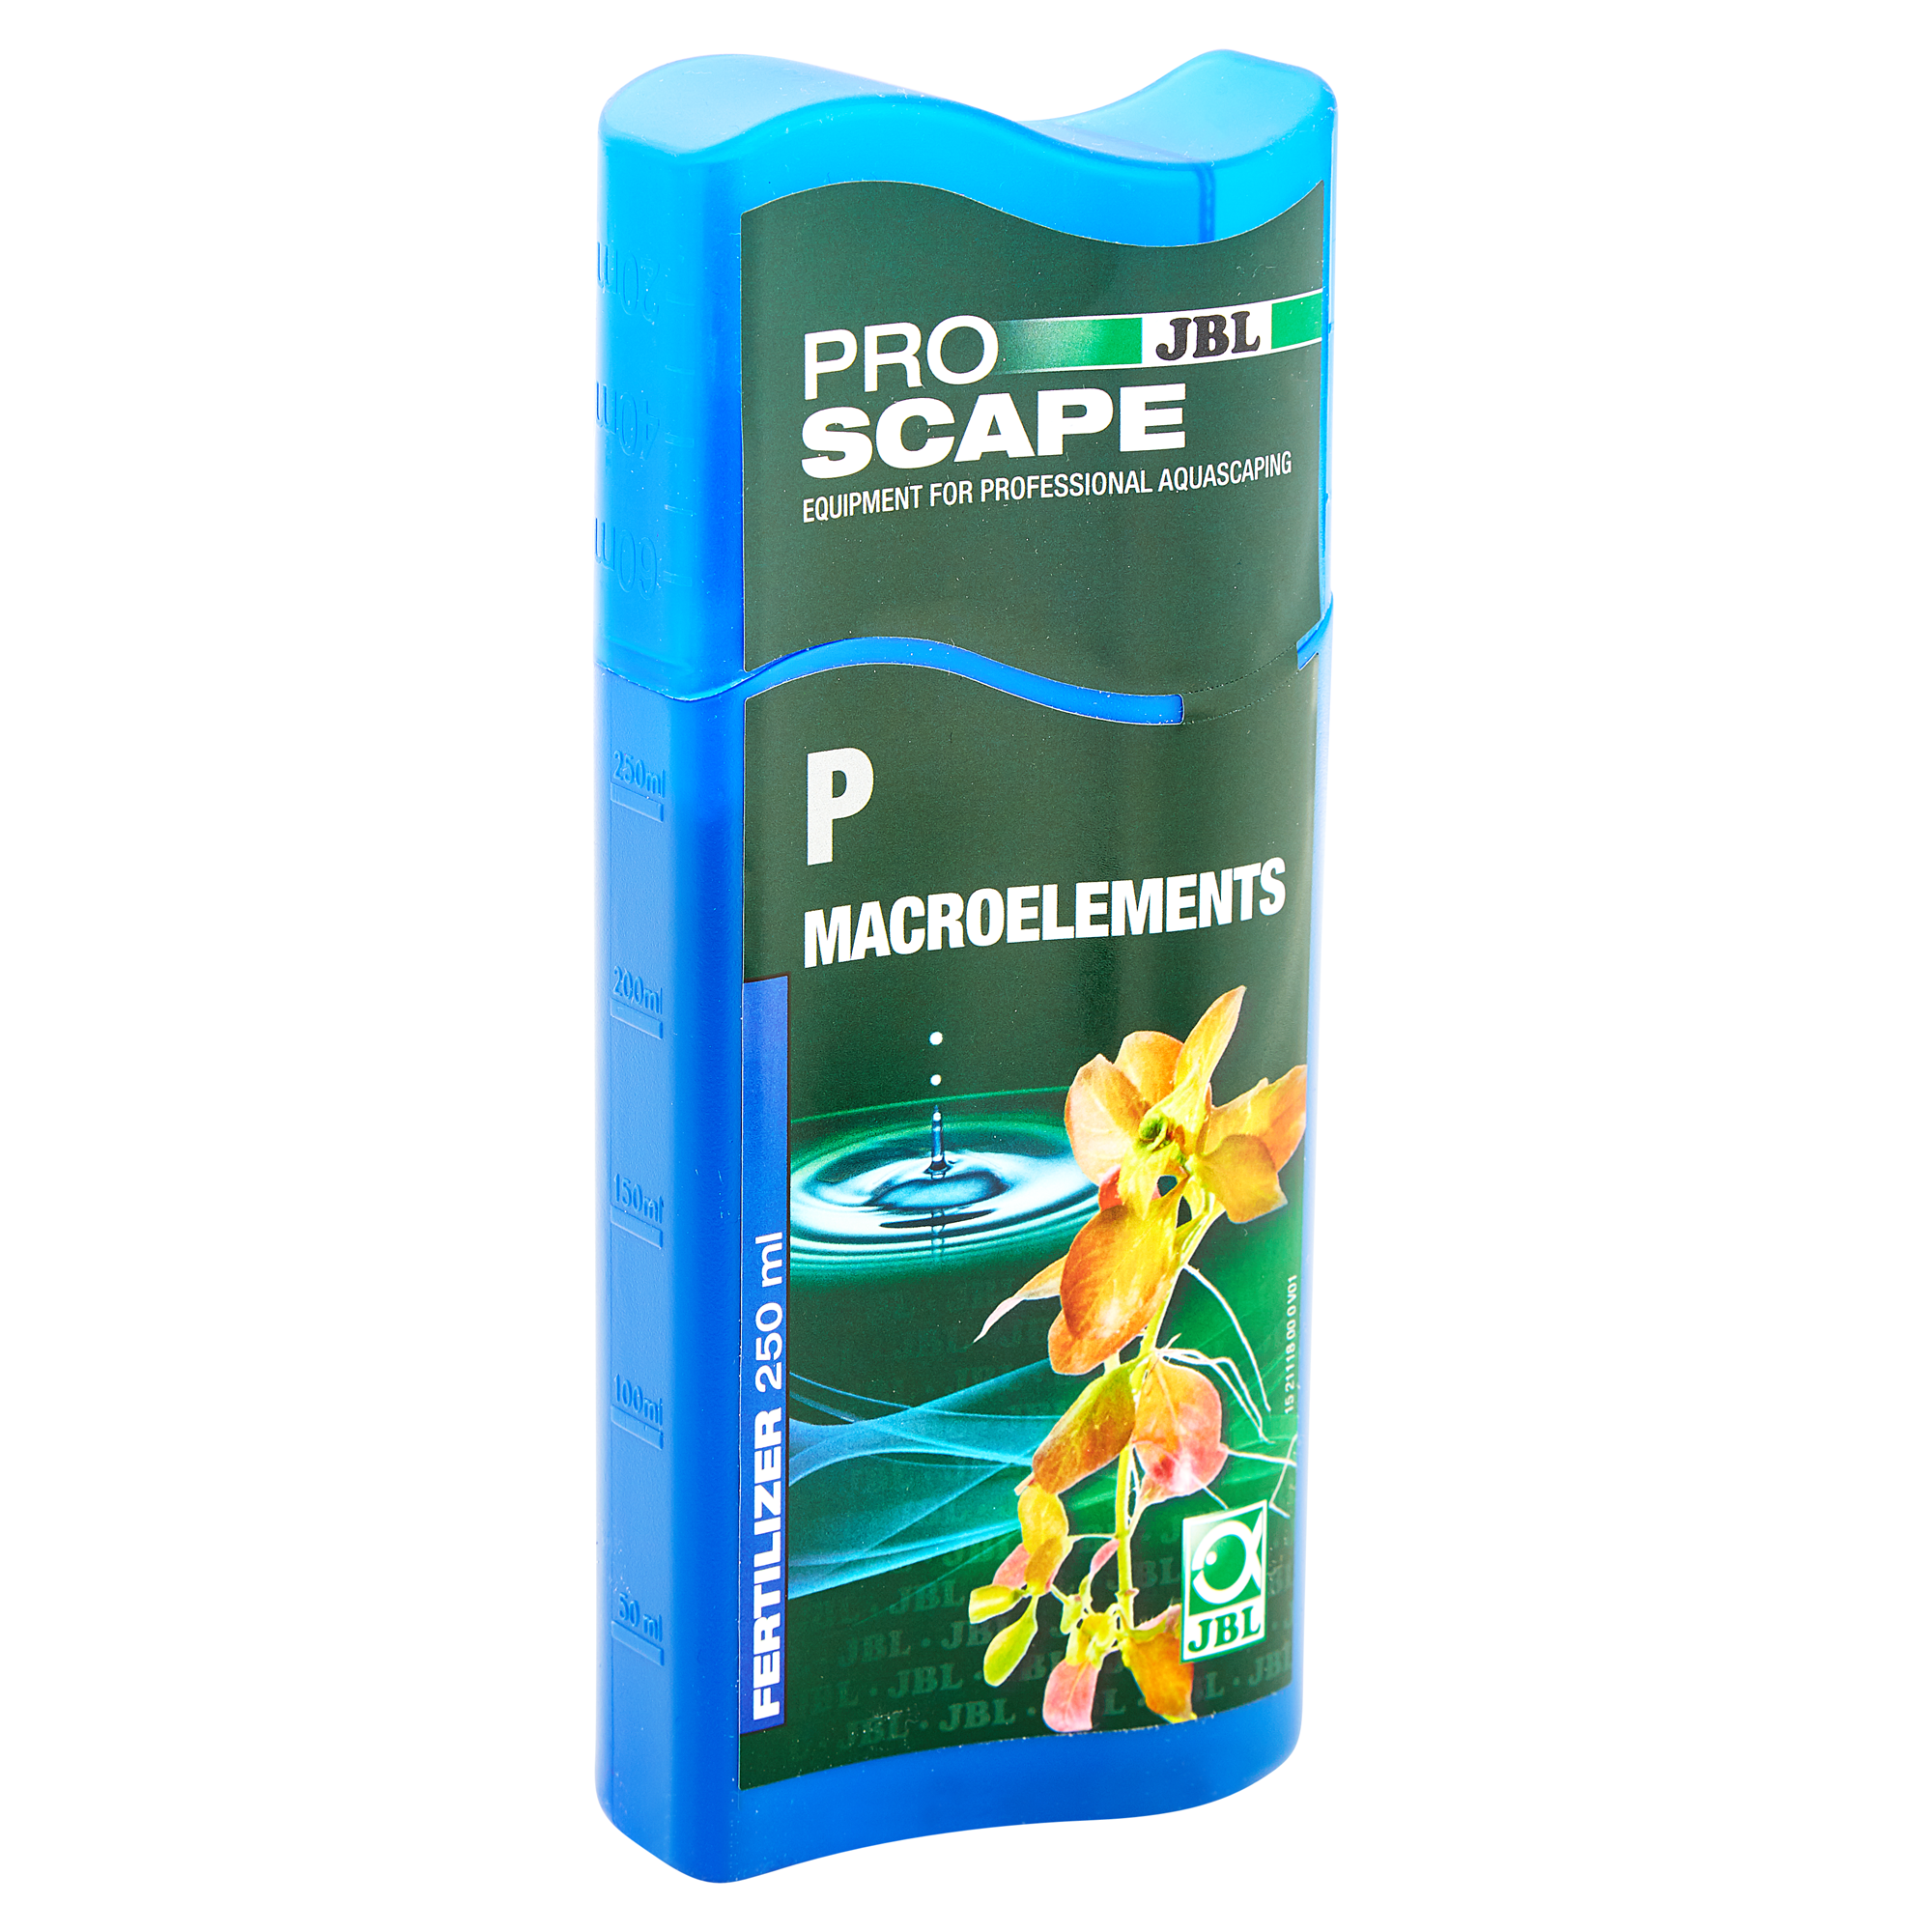 Pflanzendünger "Pro Scape" P Macroelements 250 ml + product picture